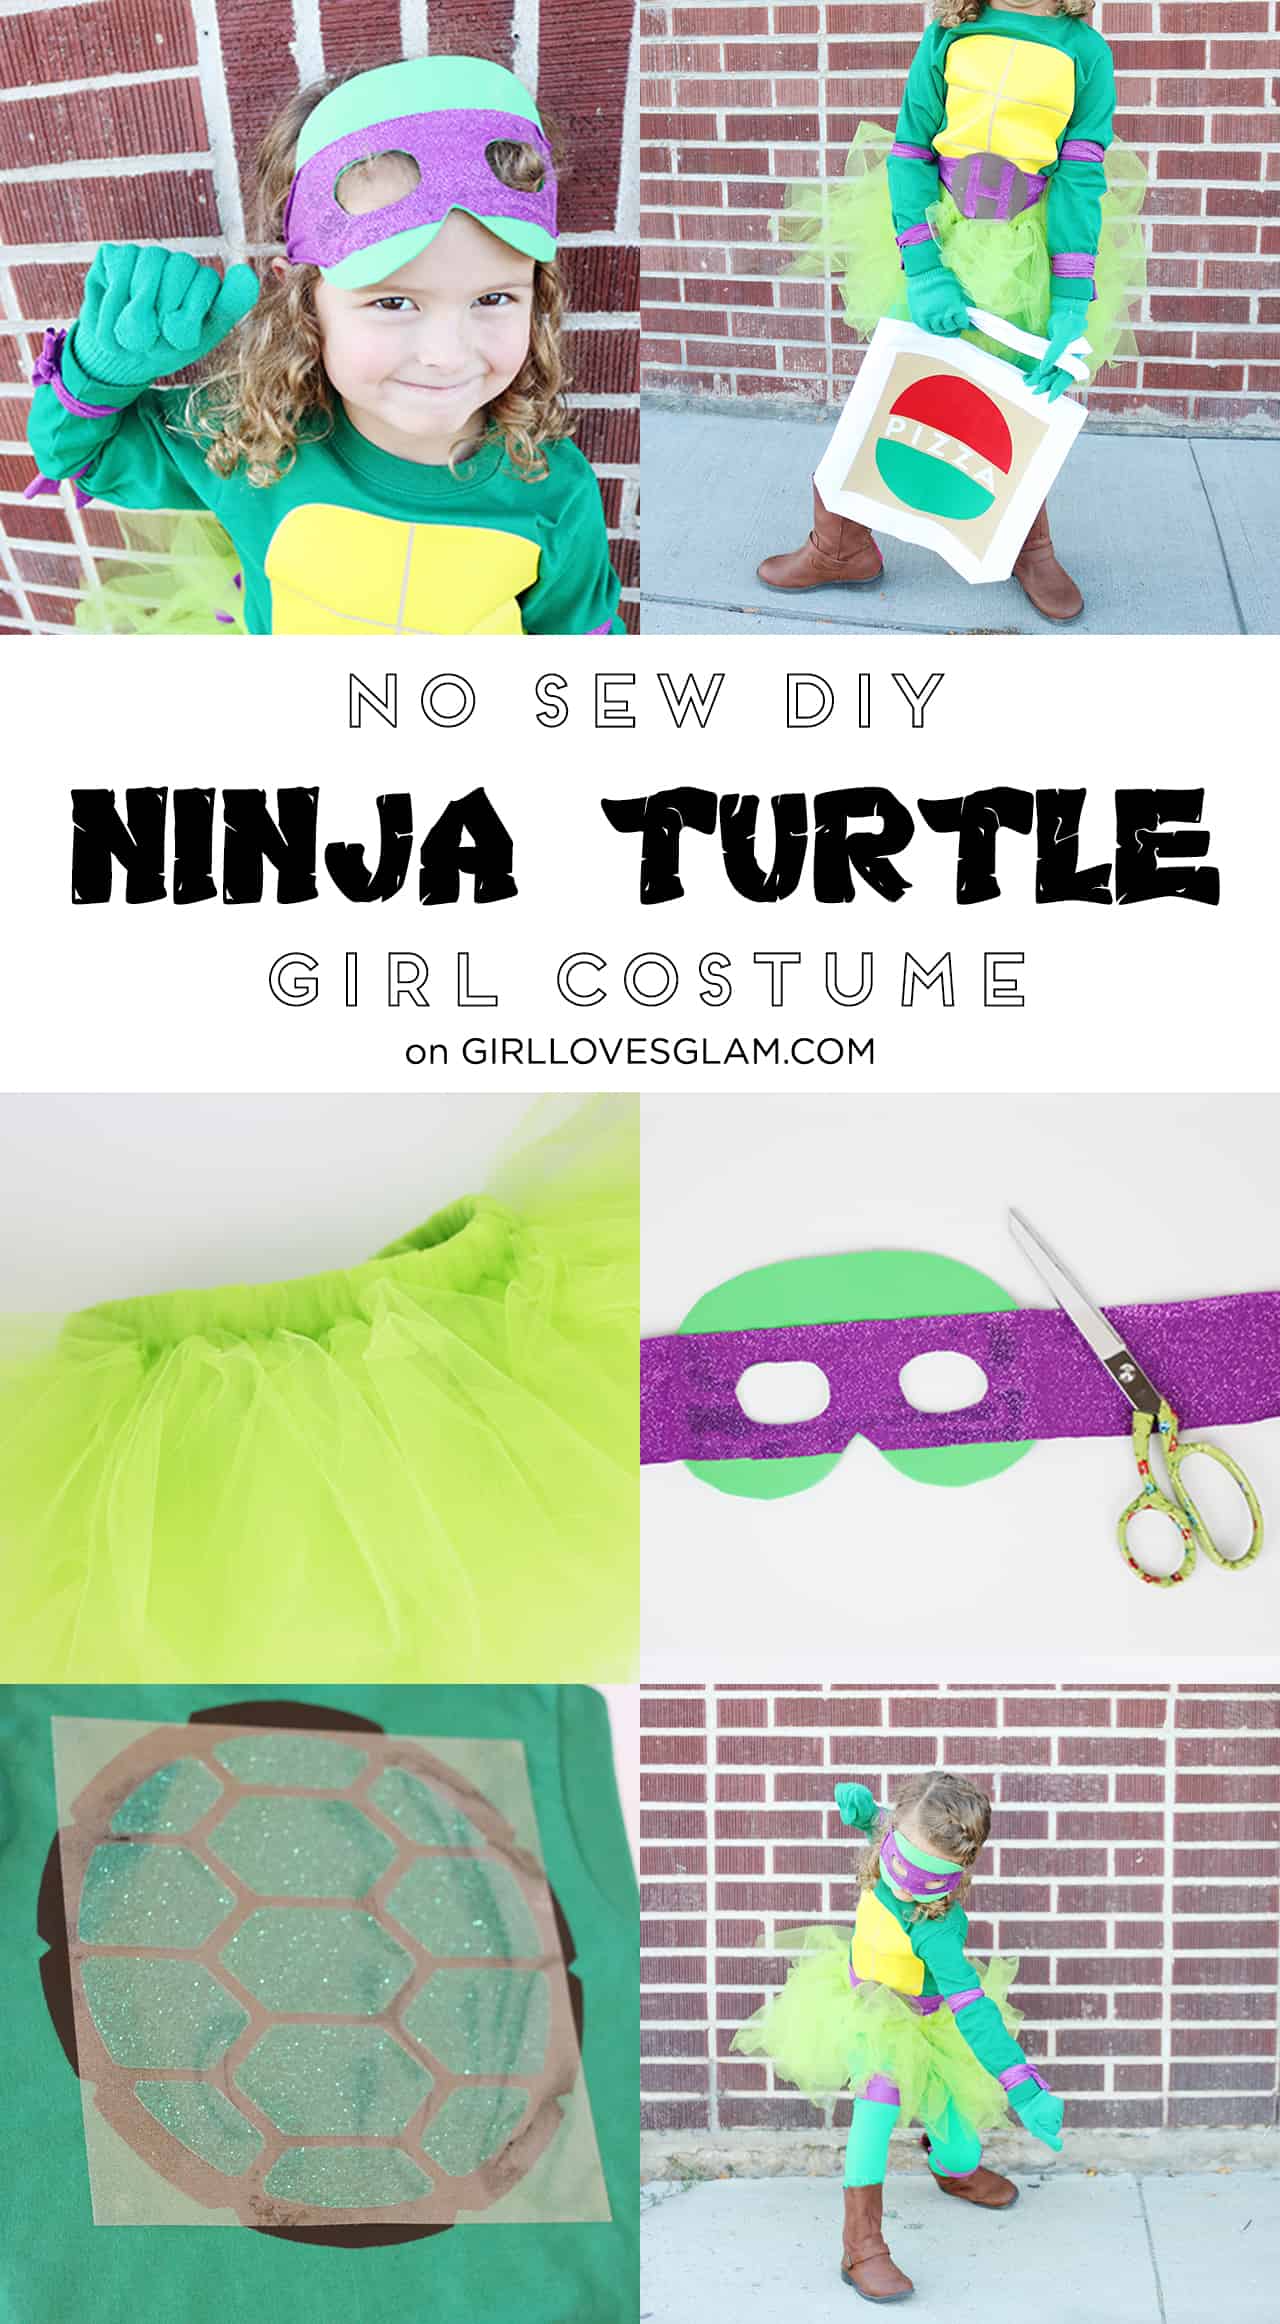 homemade ninja turtle shell